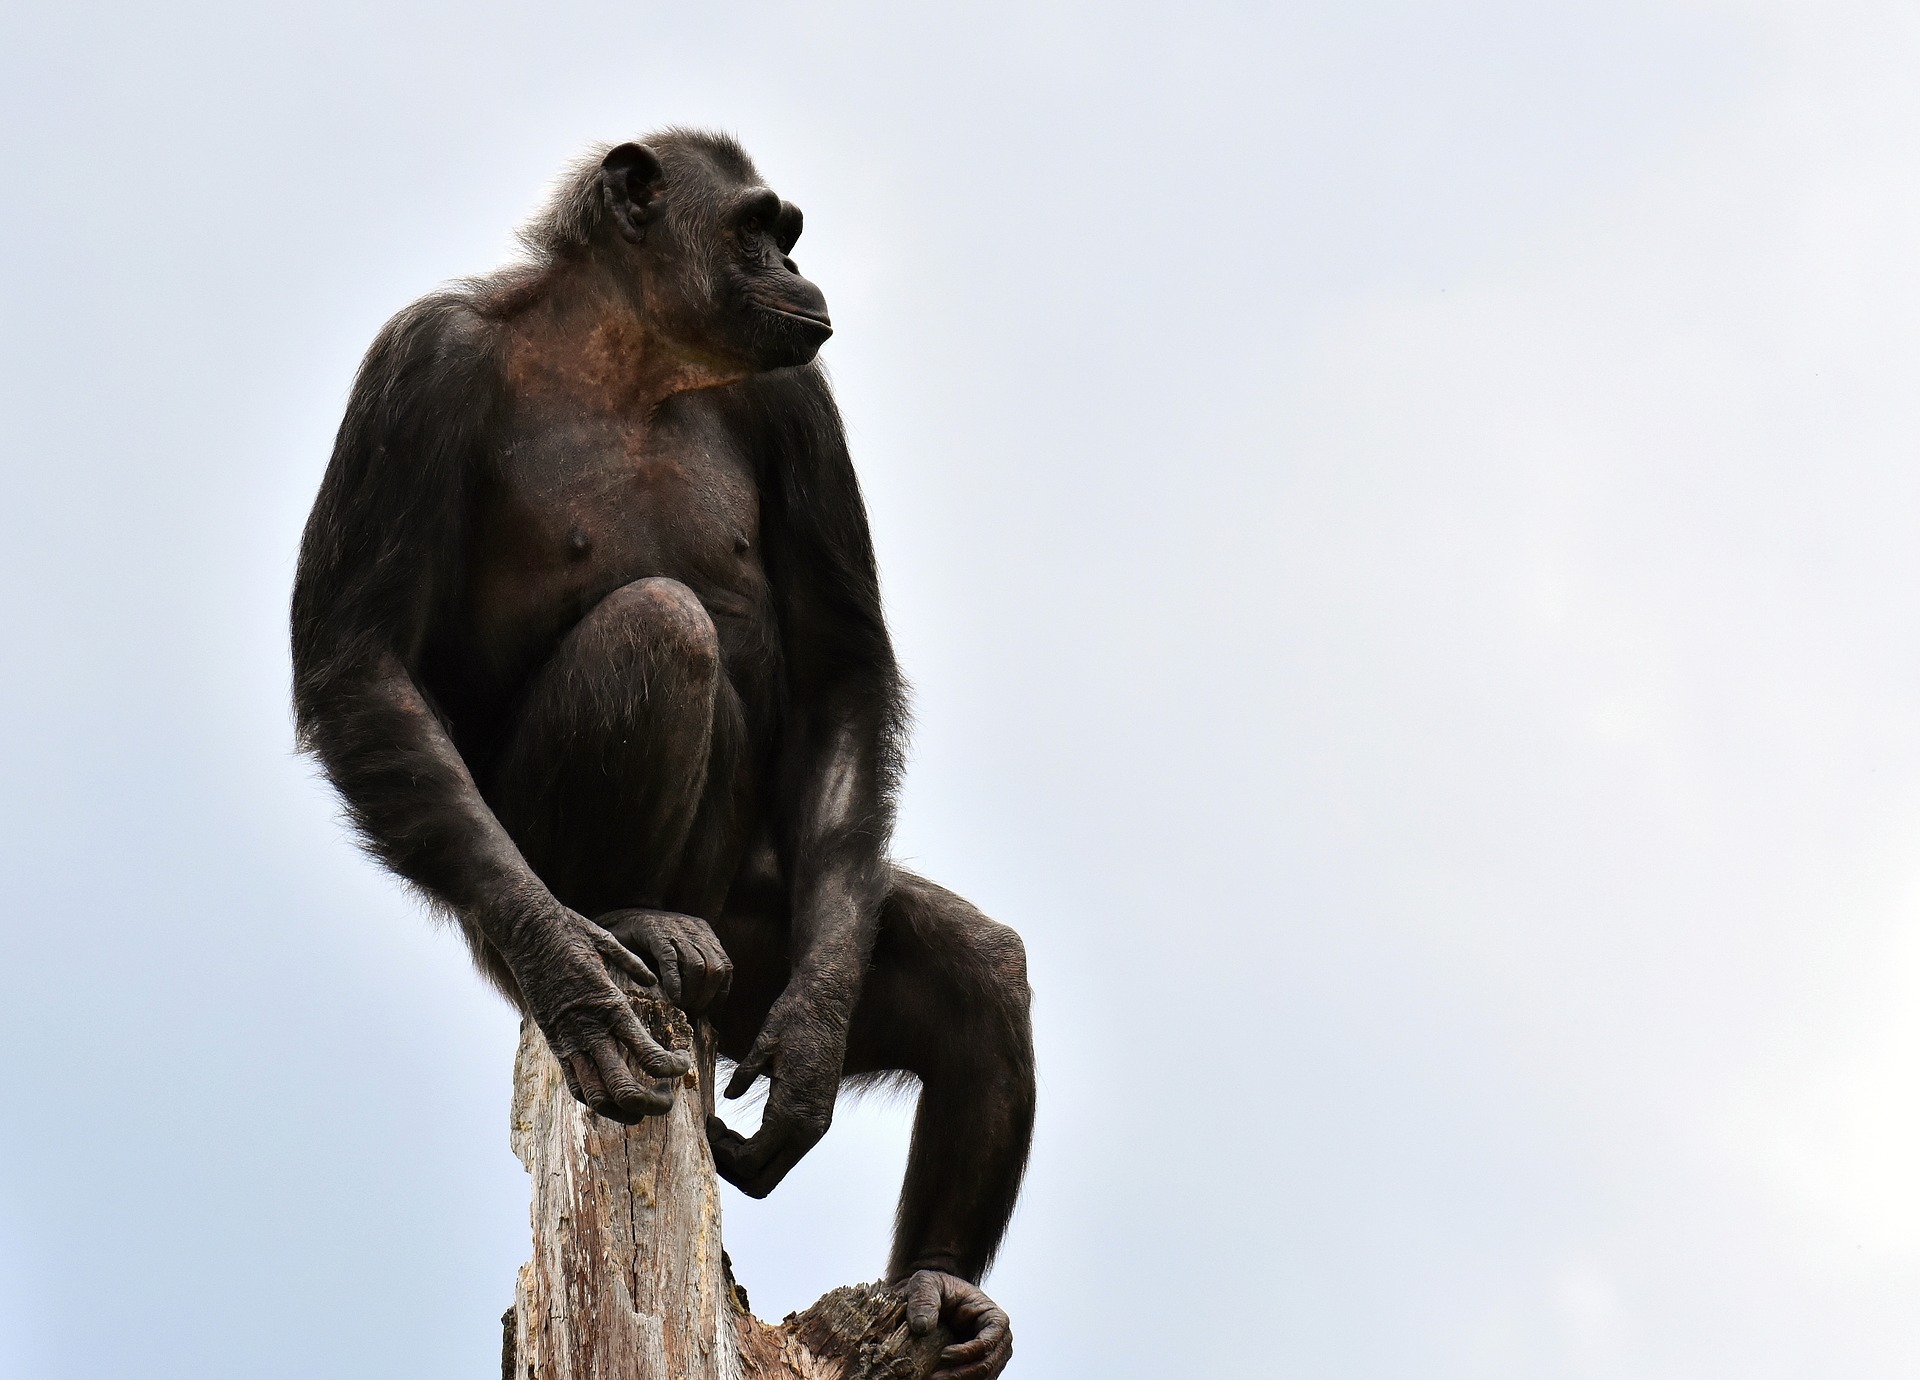 Ape Chimpanzee Monkey Primate Zoo 1920x1380